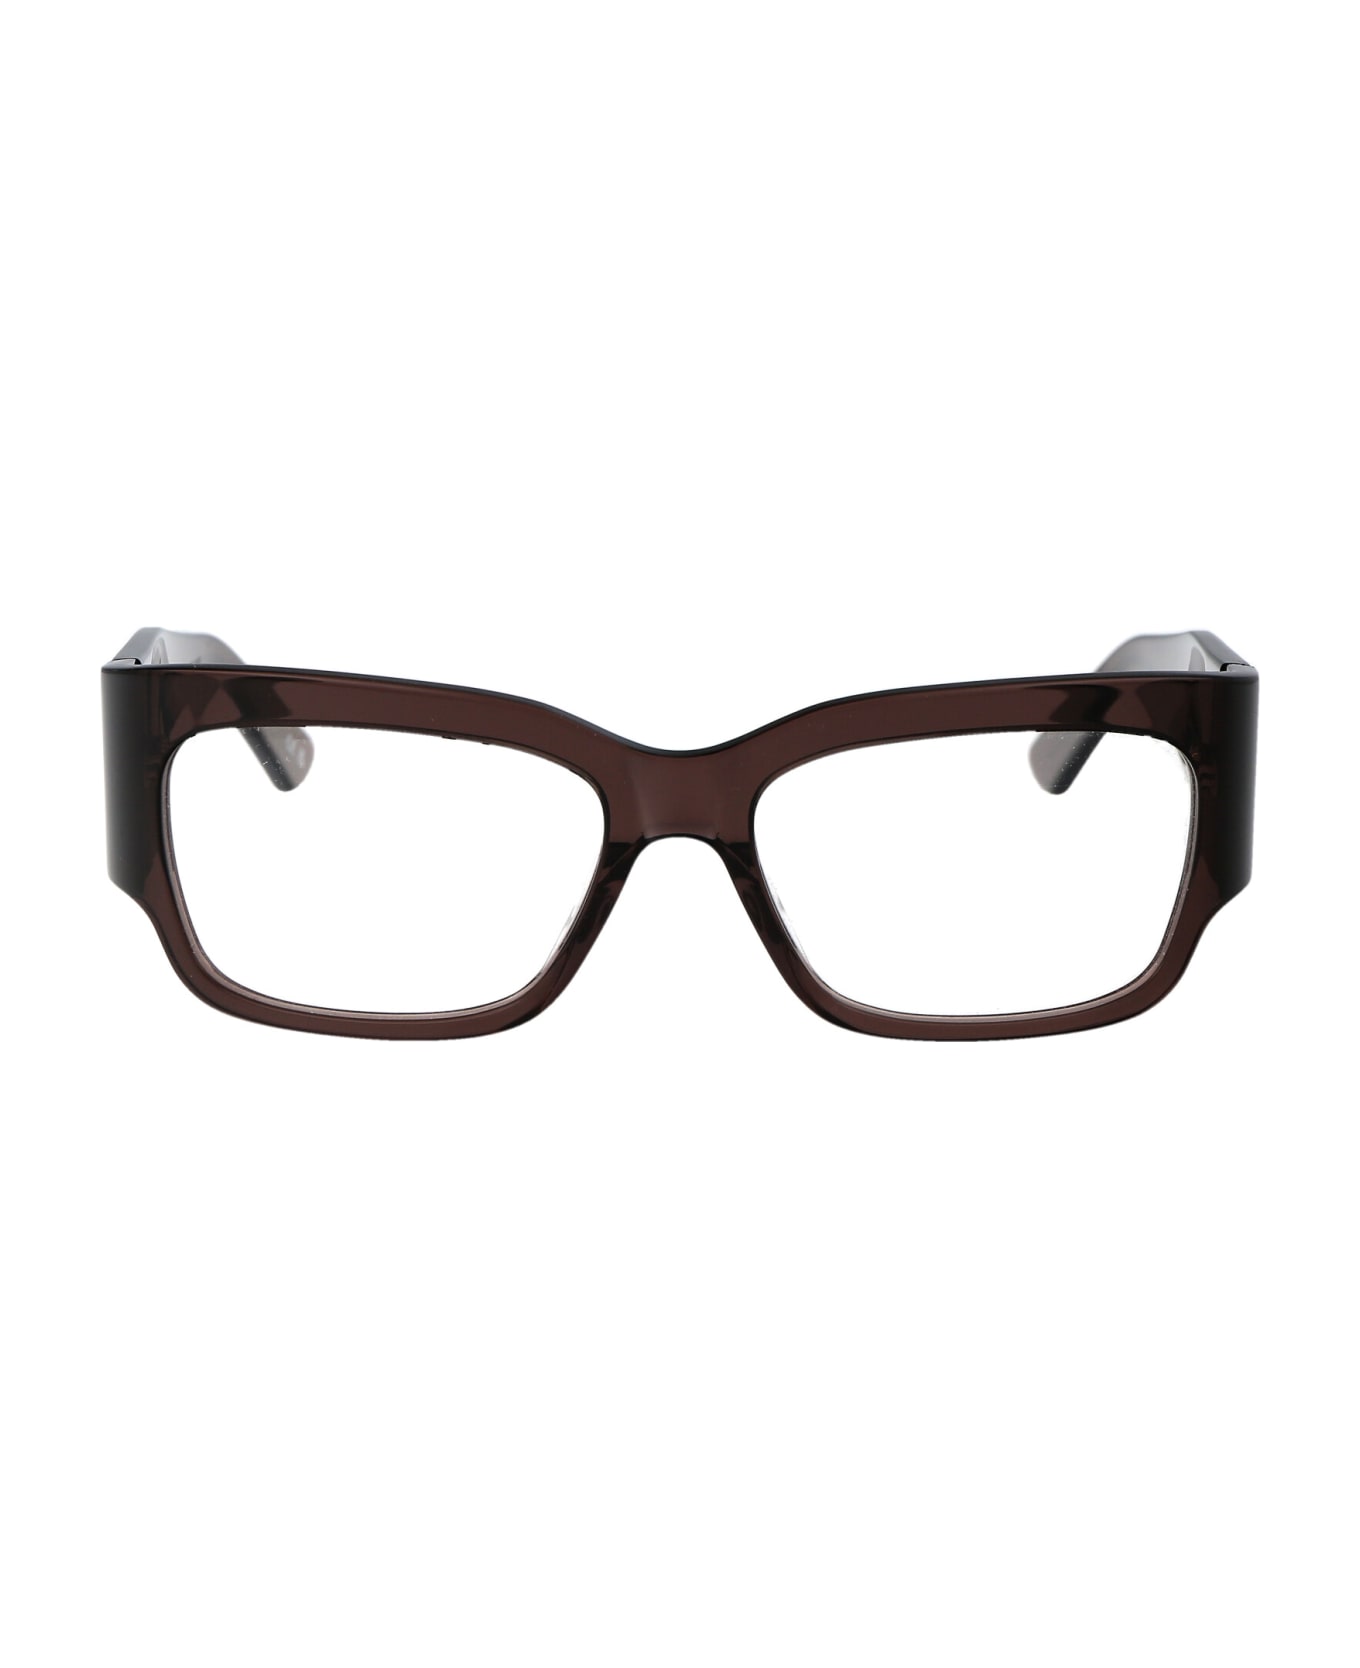 Balenciaga Eyewear Bb0332o Glasses - 005 BROWN BROWN TRANSPARENT